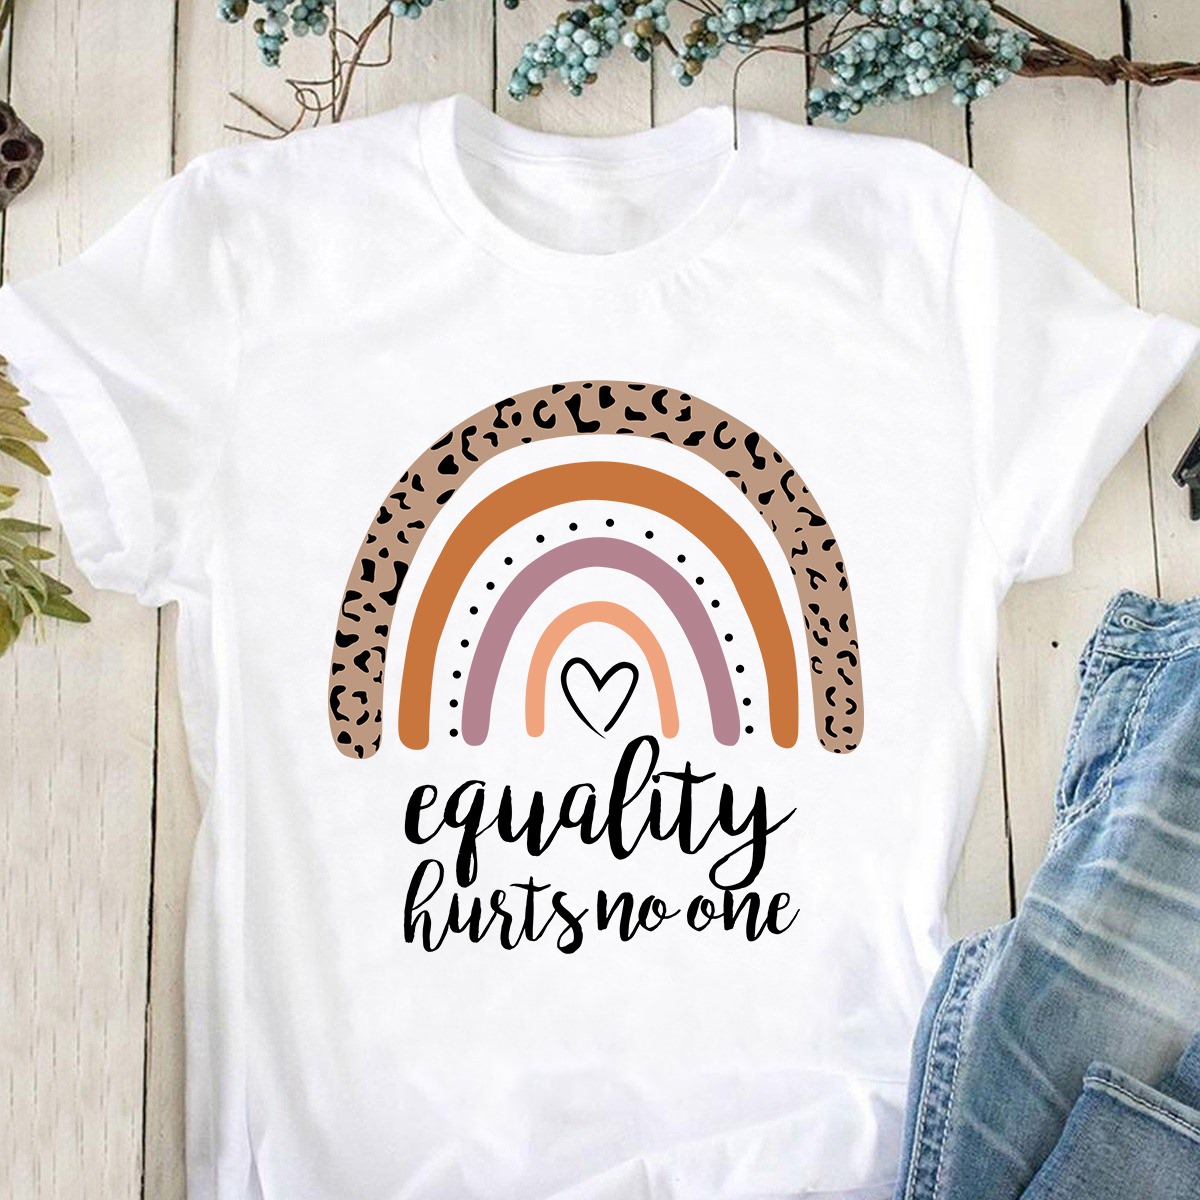 Equality hurts no one - The equality